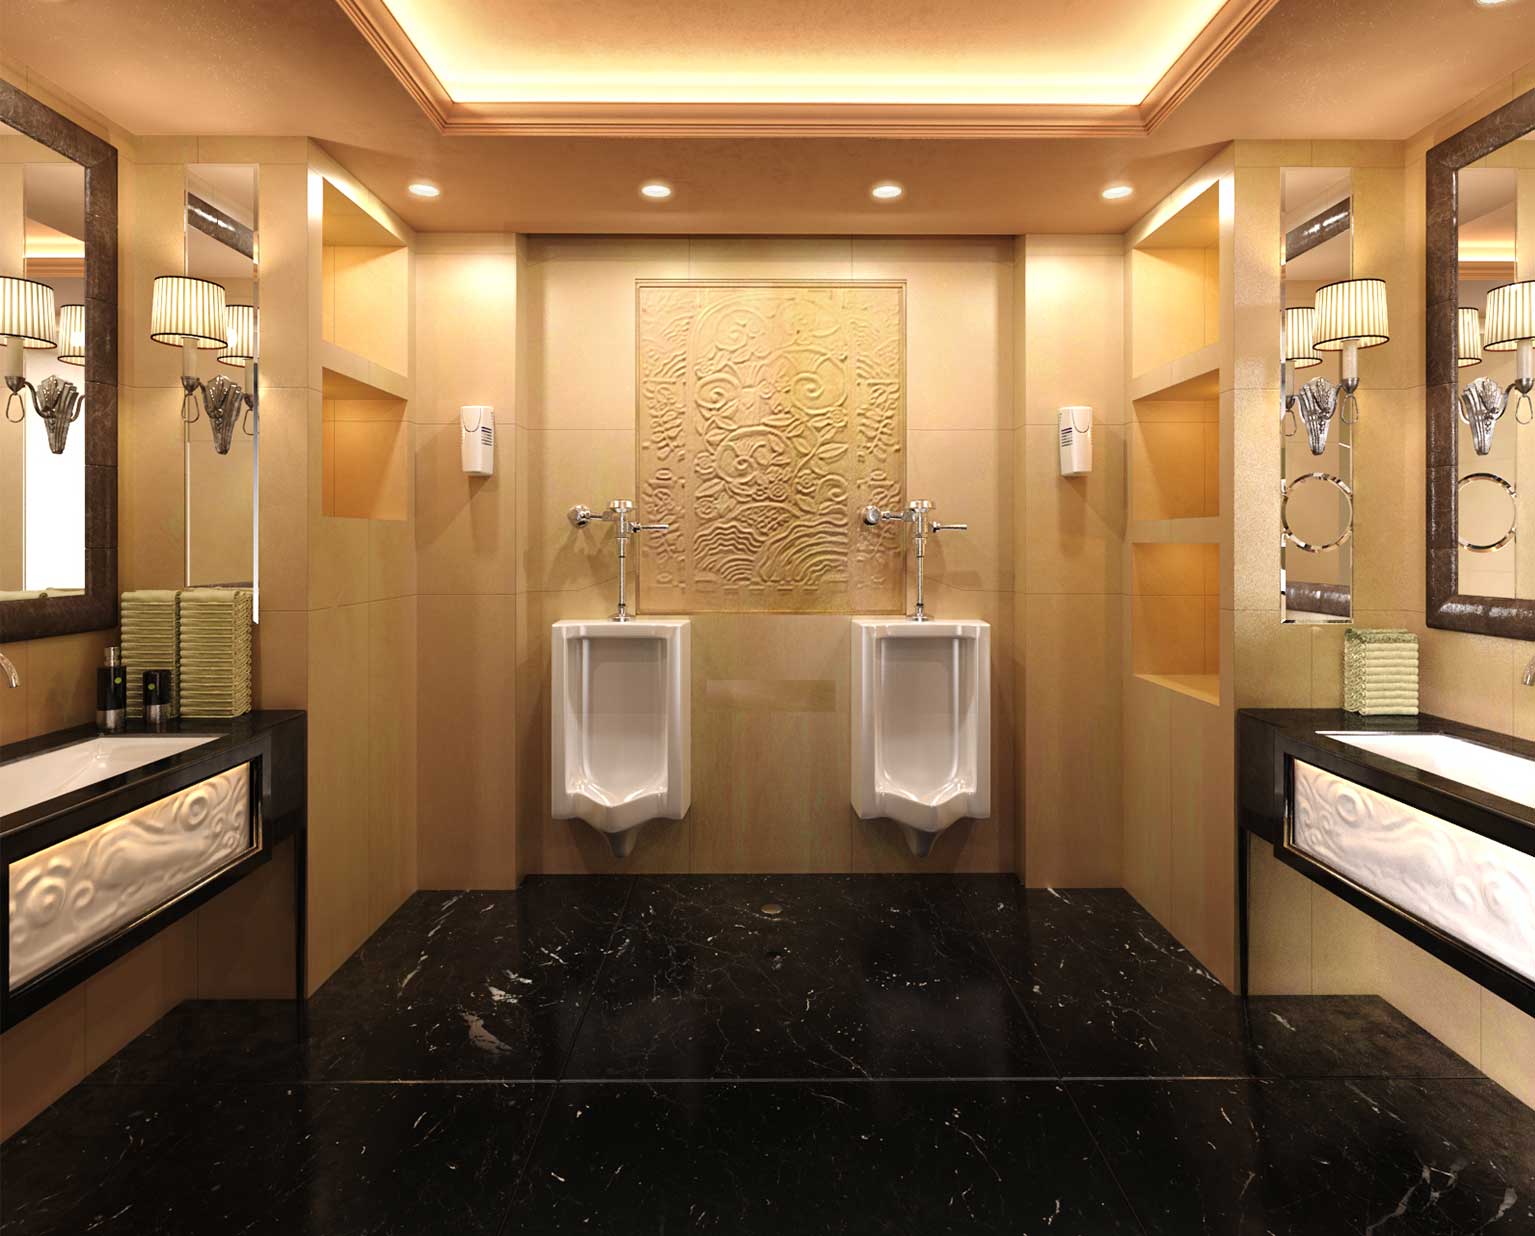 Hotels - Washroom